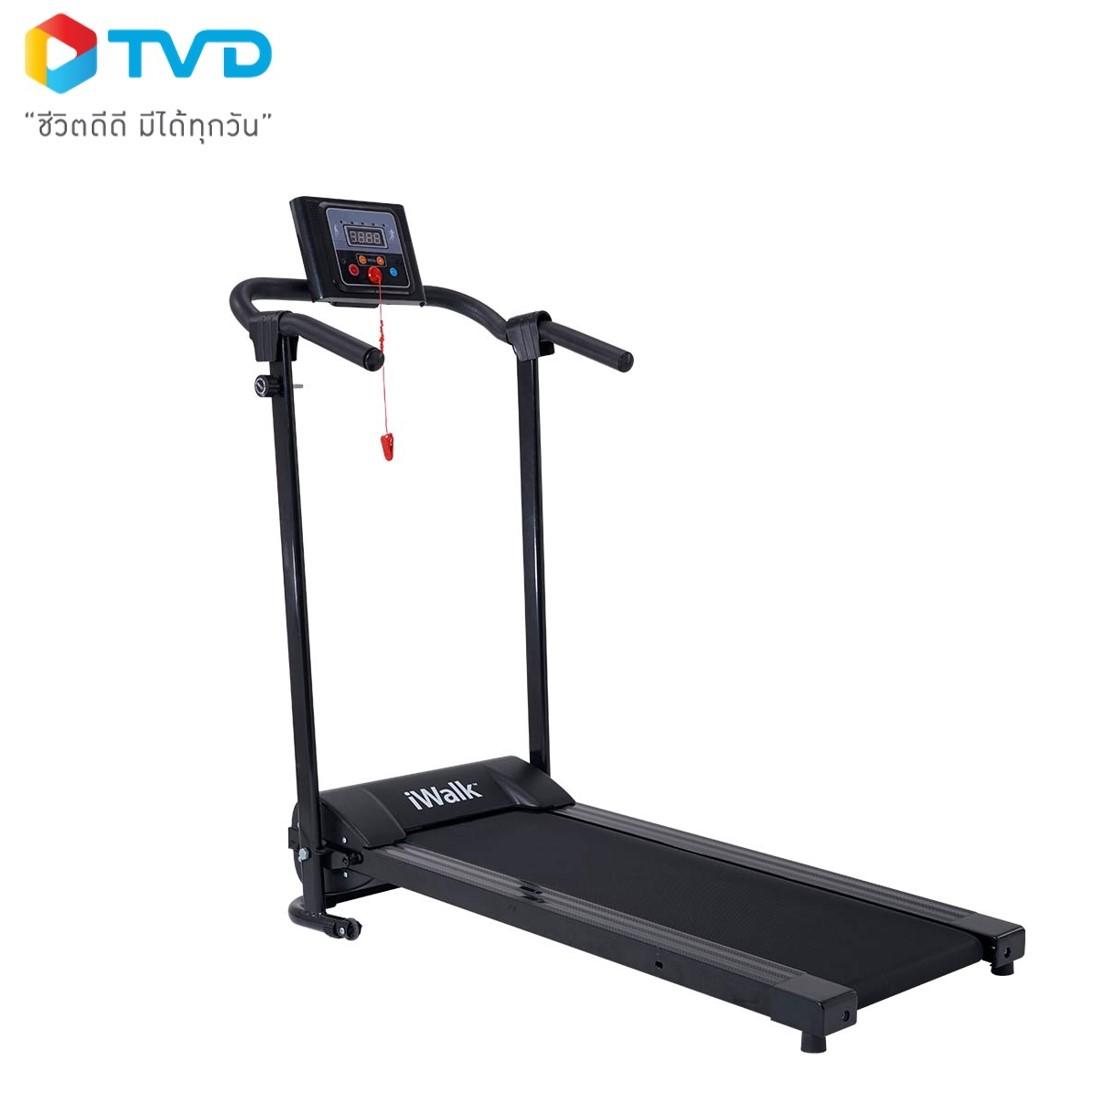 TVDirect  I Walk Treadmill  E318Z Black e ลู่บริหาร สีดำ